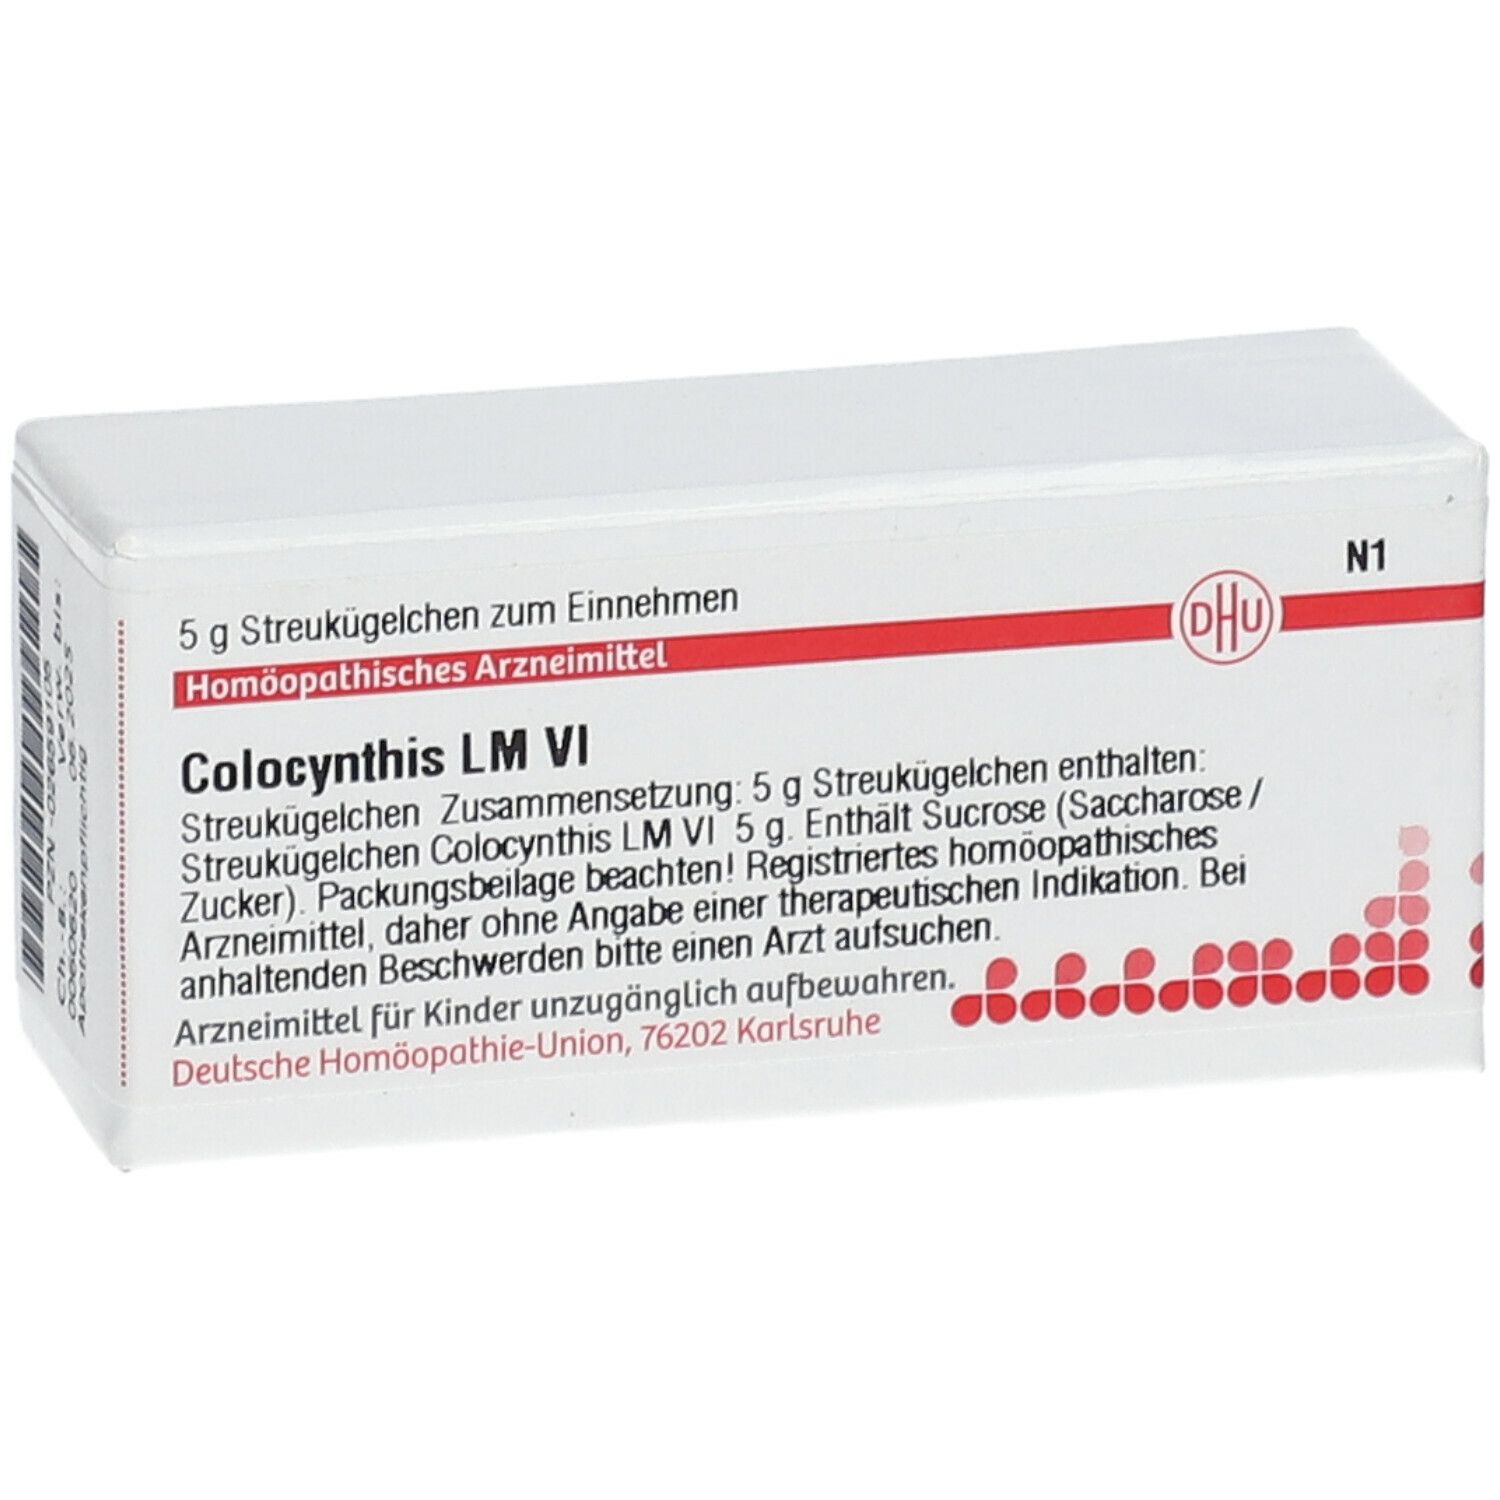 DHU Colocynthis LM VI